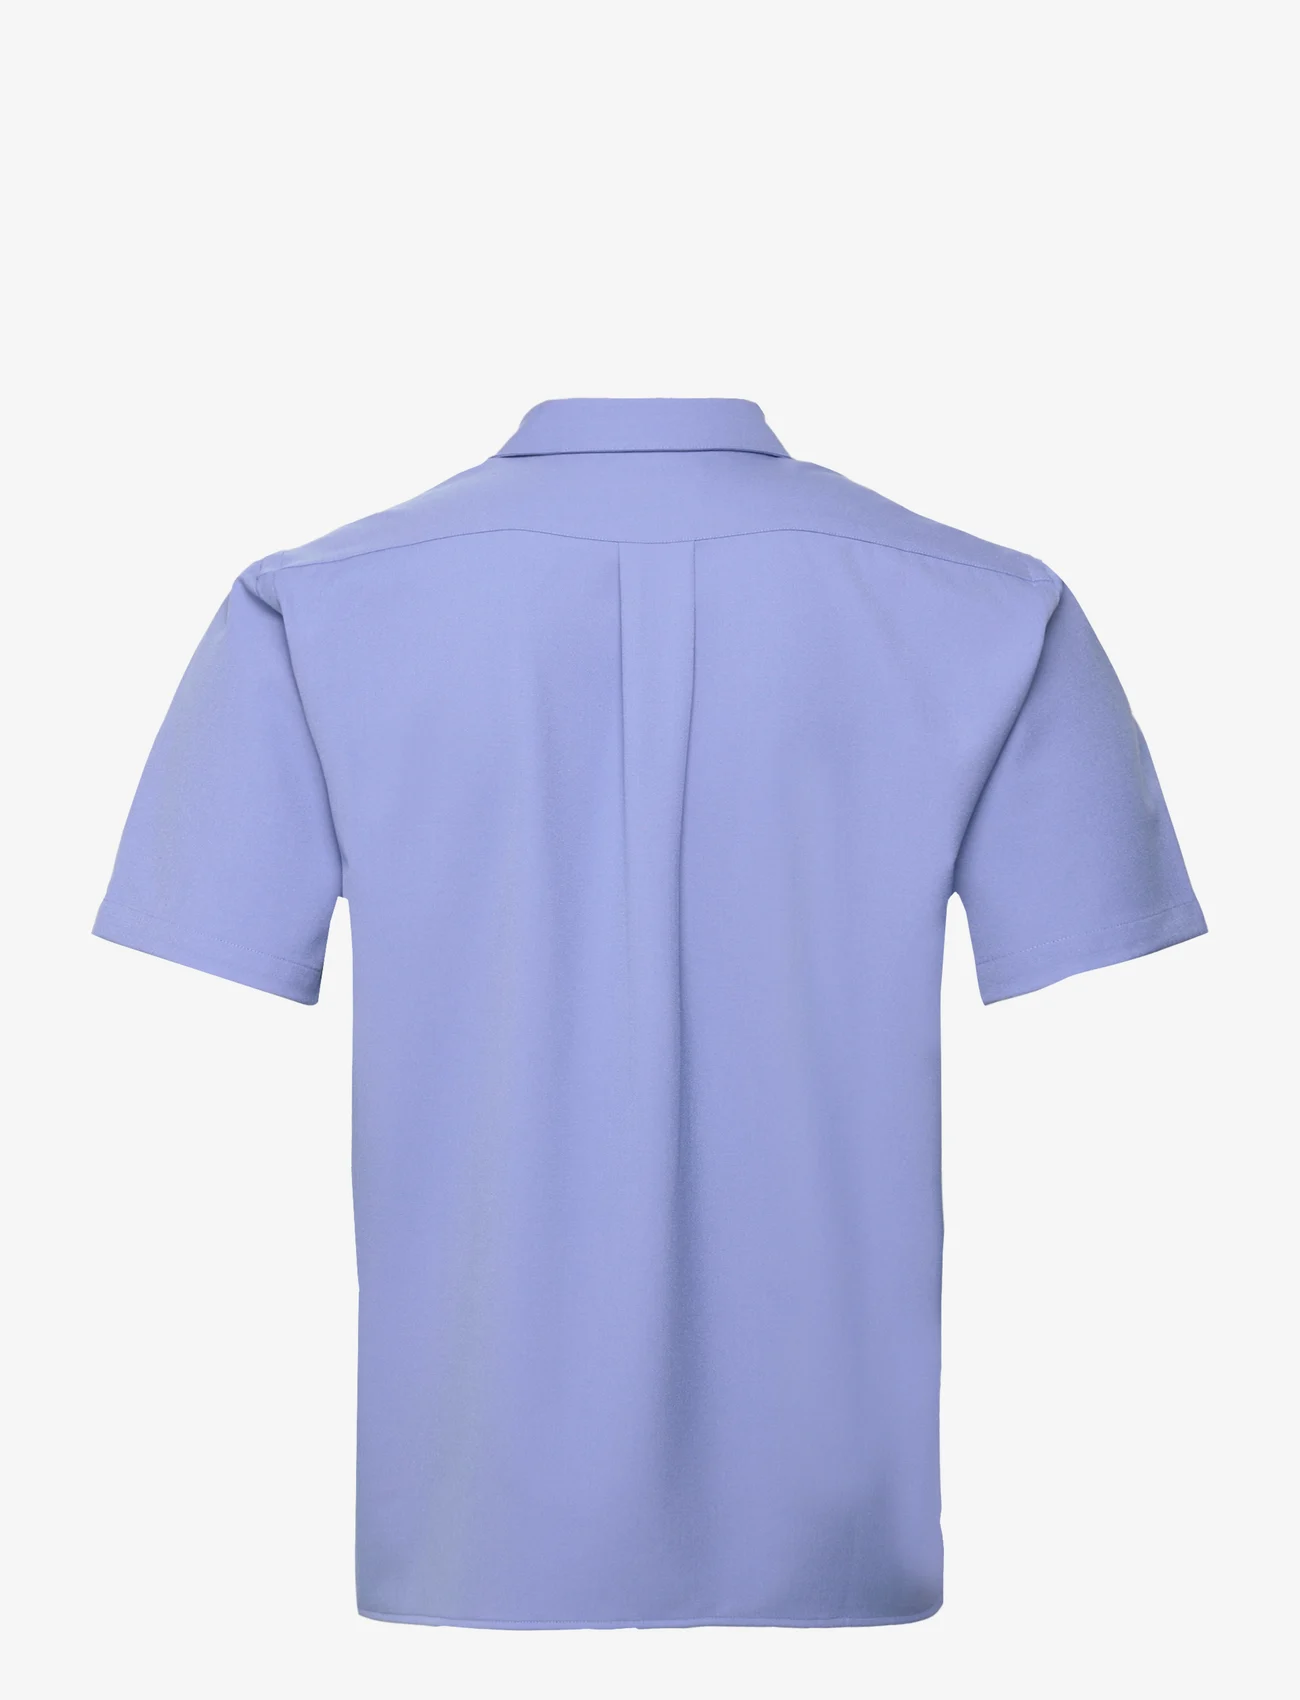 Libertine-Libertine - Cave - basic shirts - sky blue - 1